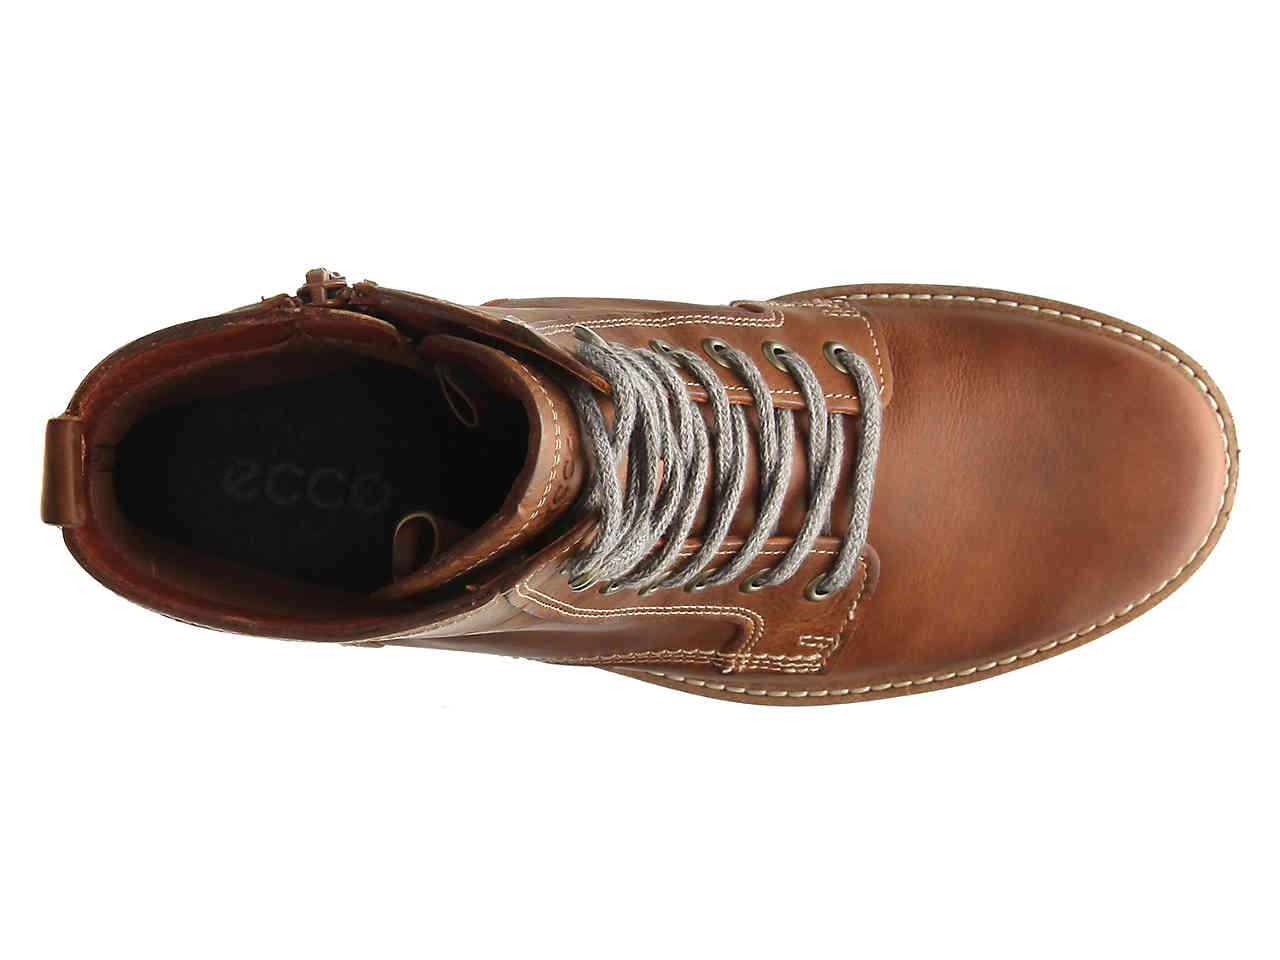 Ecco Leather Elaine Combat Boot in Cognac (Brown) - Lyst